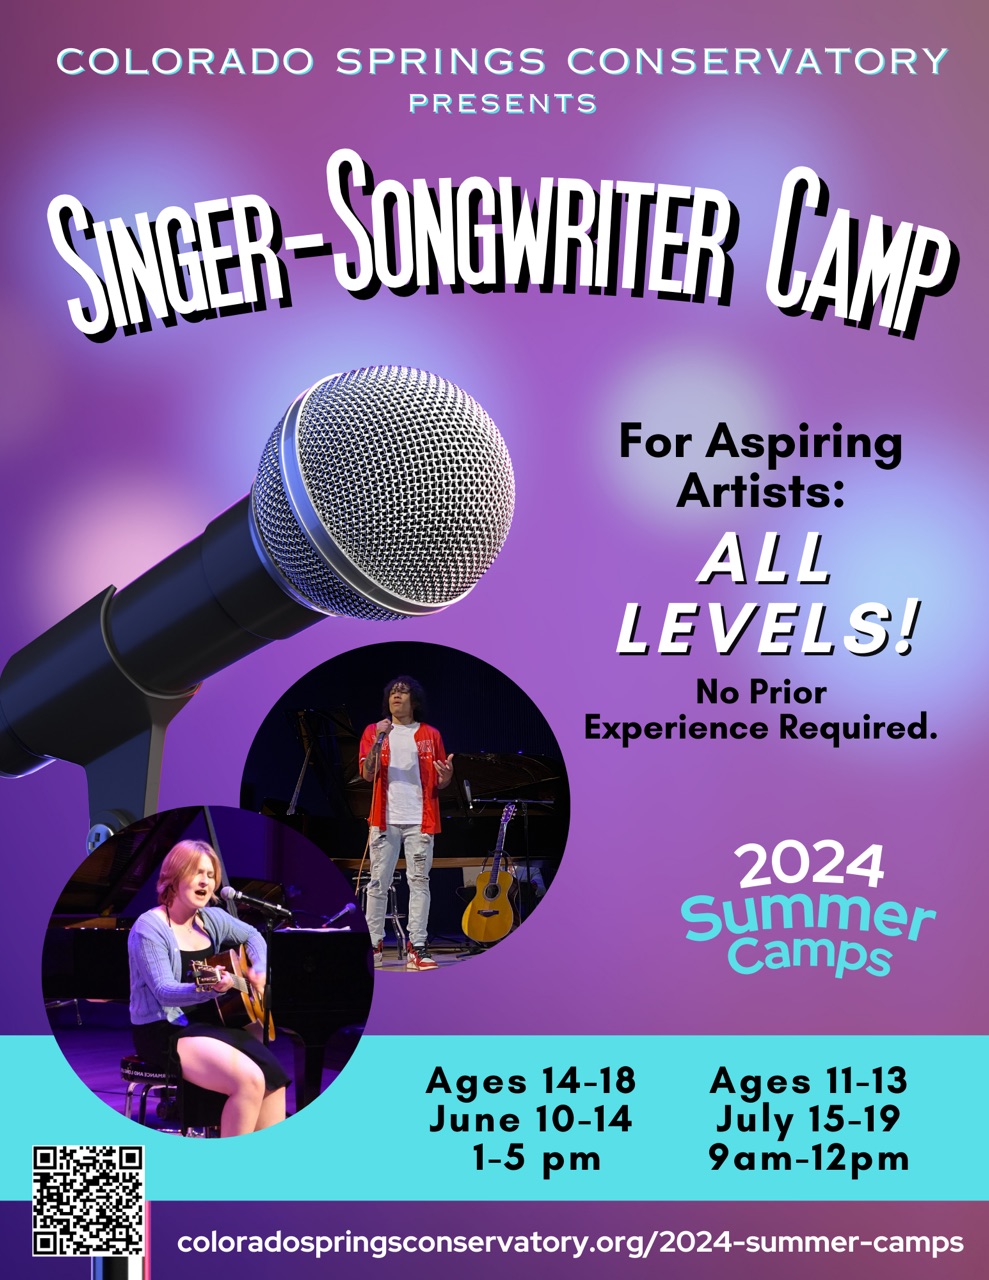 Singer songwriter camp